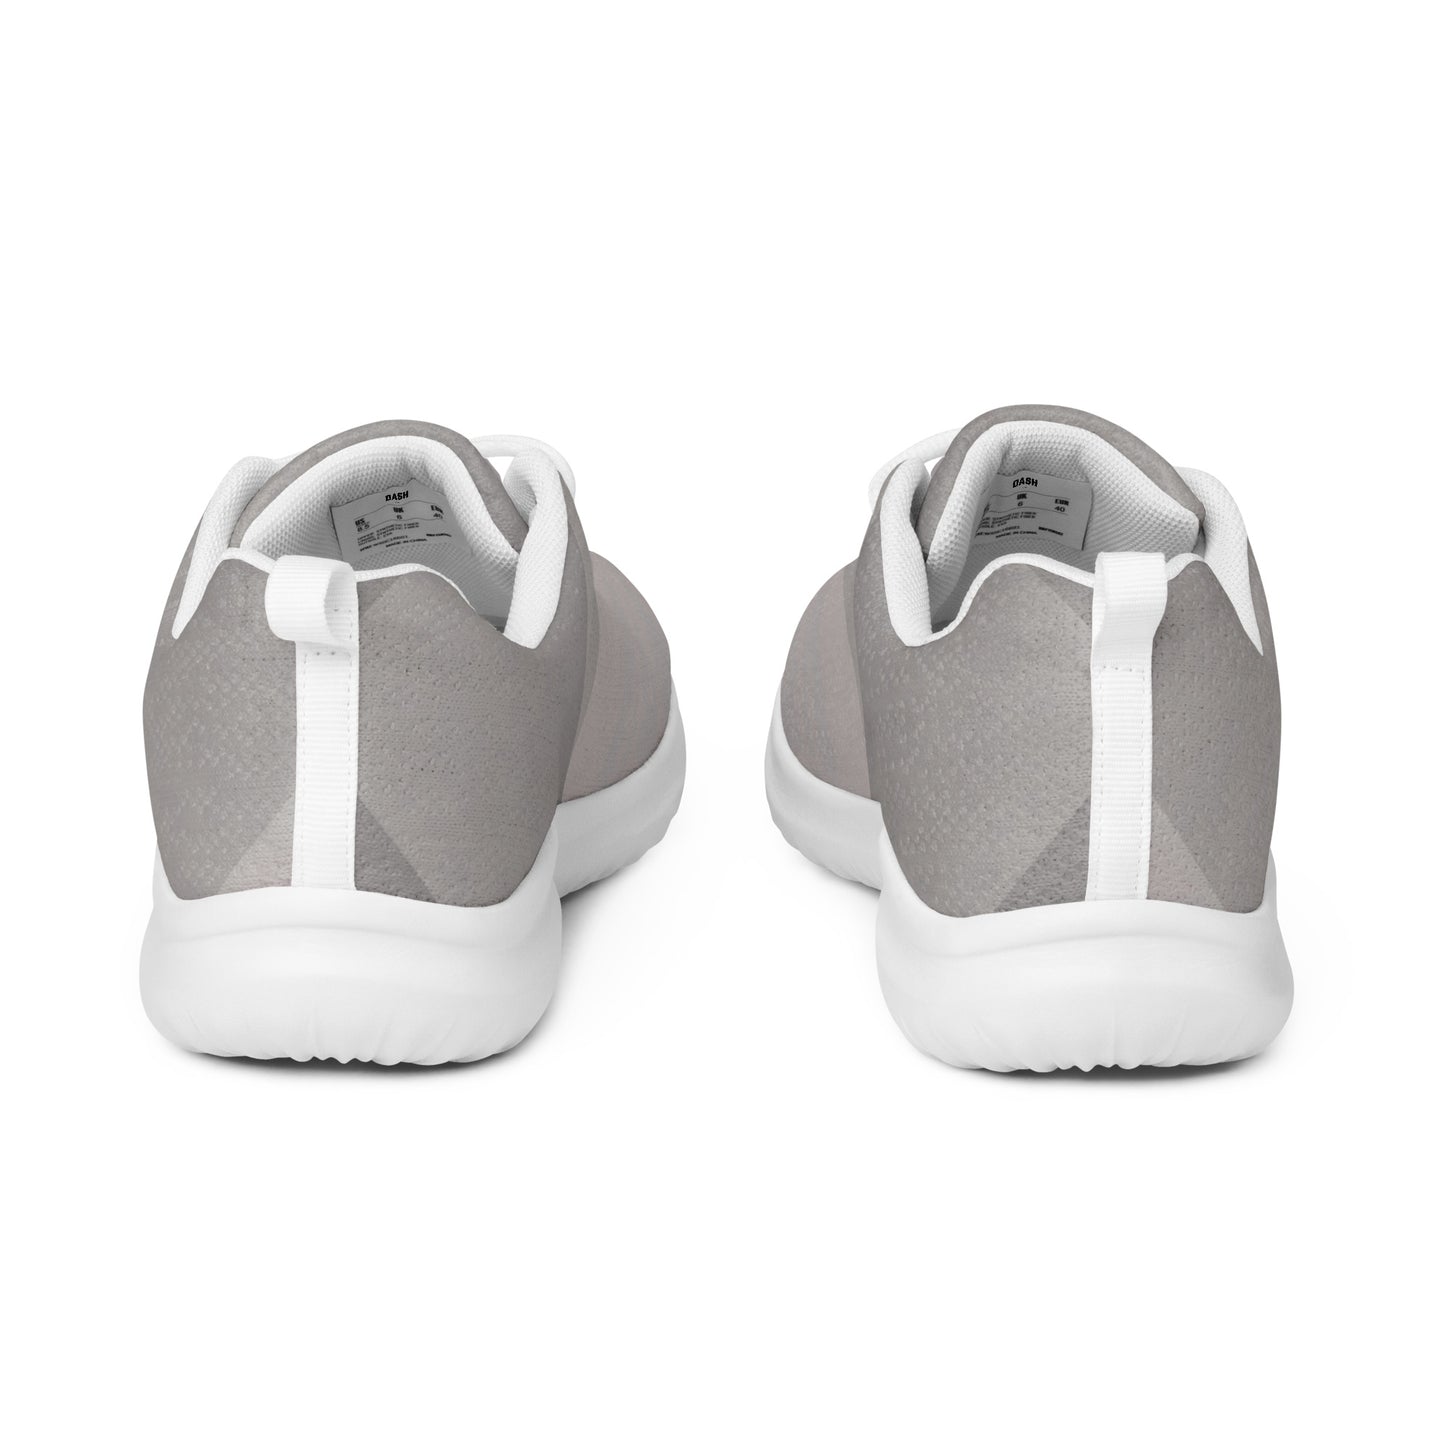 DASH Geo Gray Men’s Athletic Shoes Lightweight Breathable Design by IOBI Original Apparel